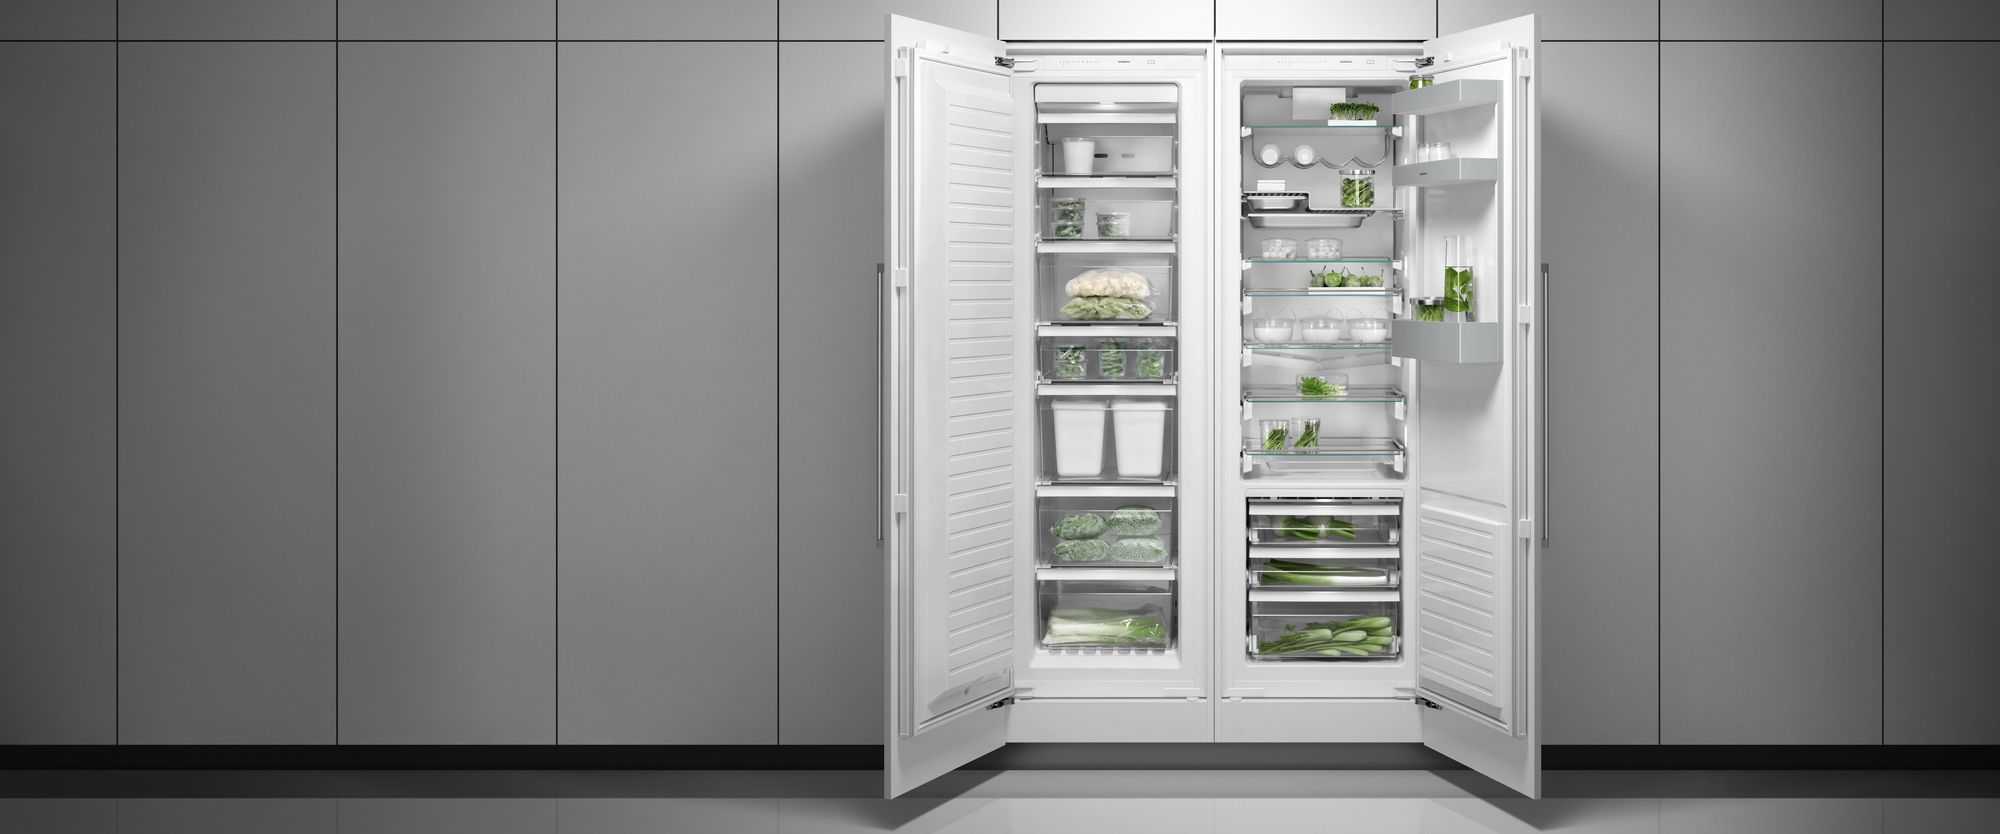 Gaggenau Refrigerators Vario 200 Series by FCI London